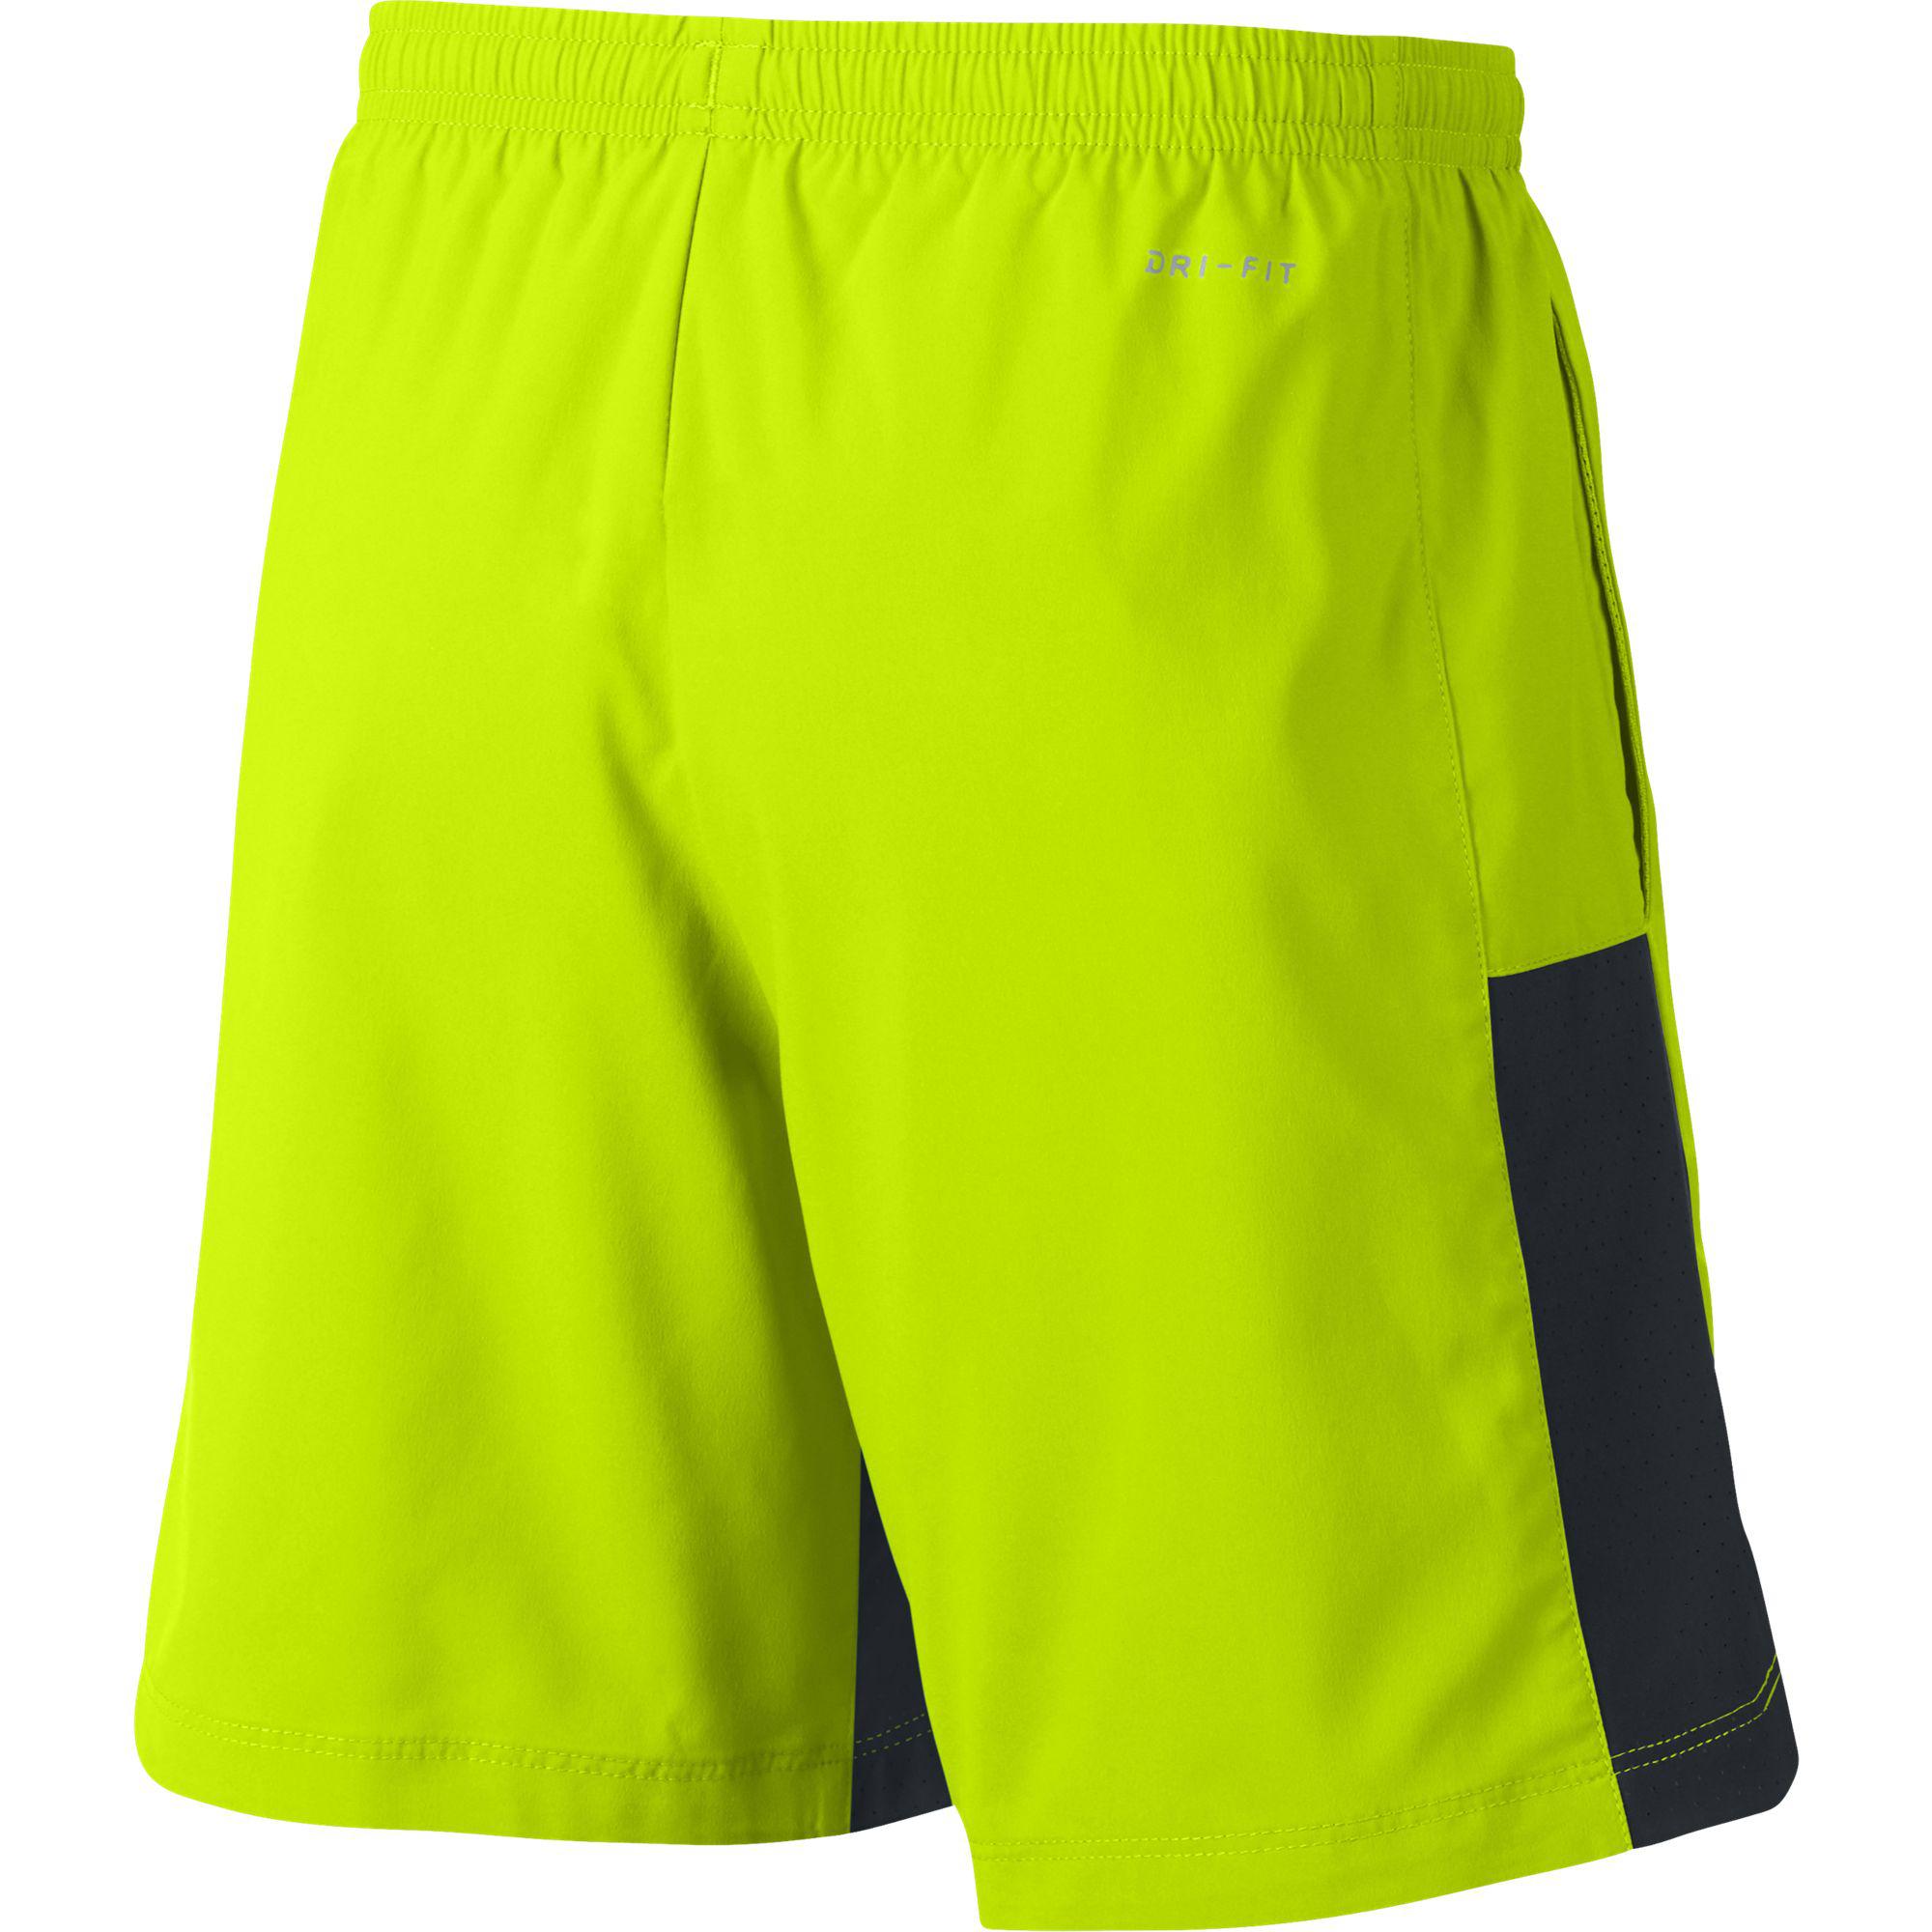 Nike Boys Flex Shorts - Volt Yellow/Black - Tennisnuts.com